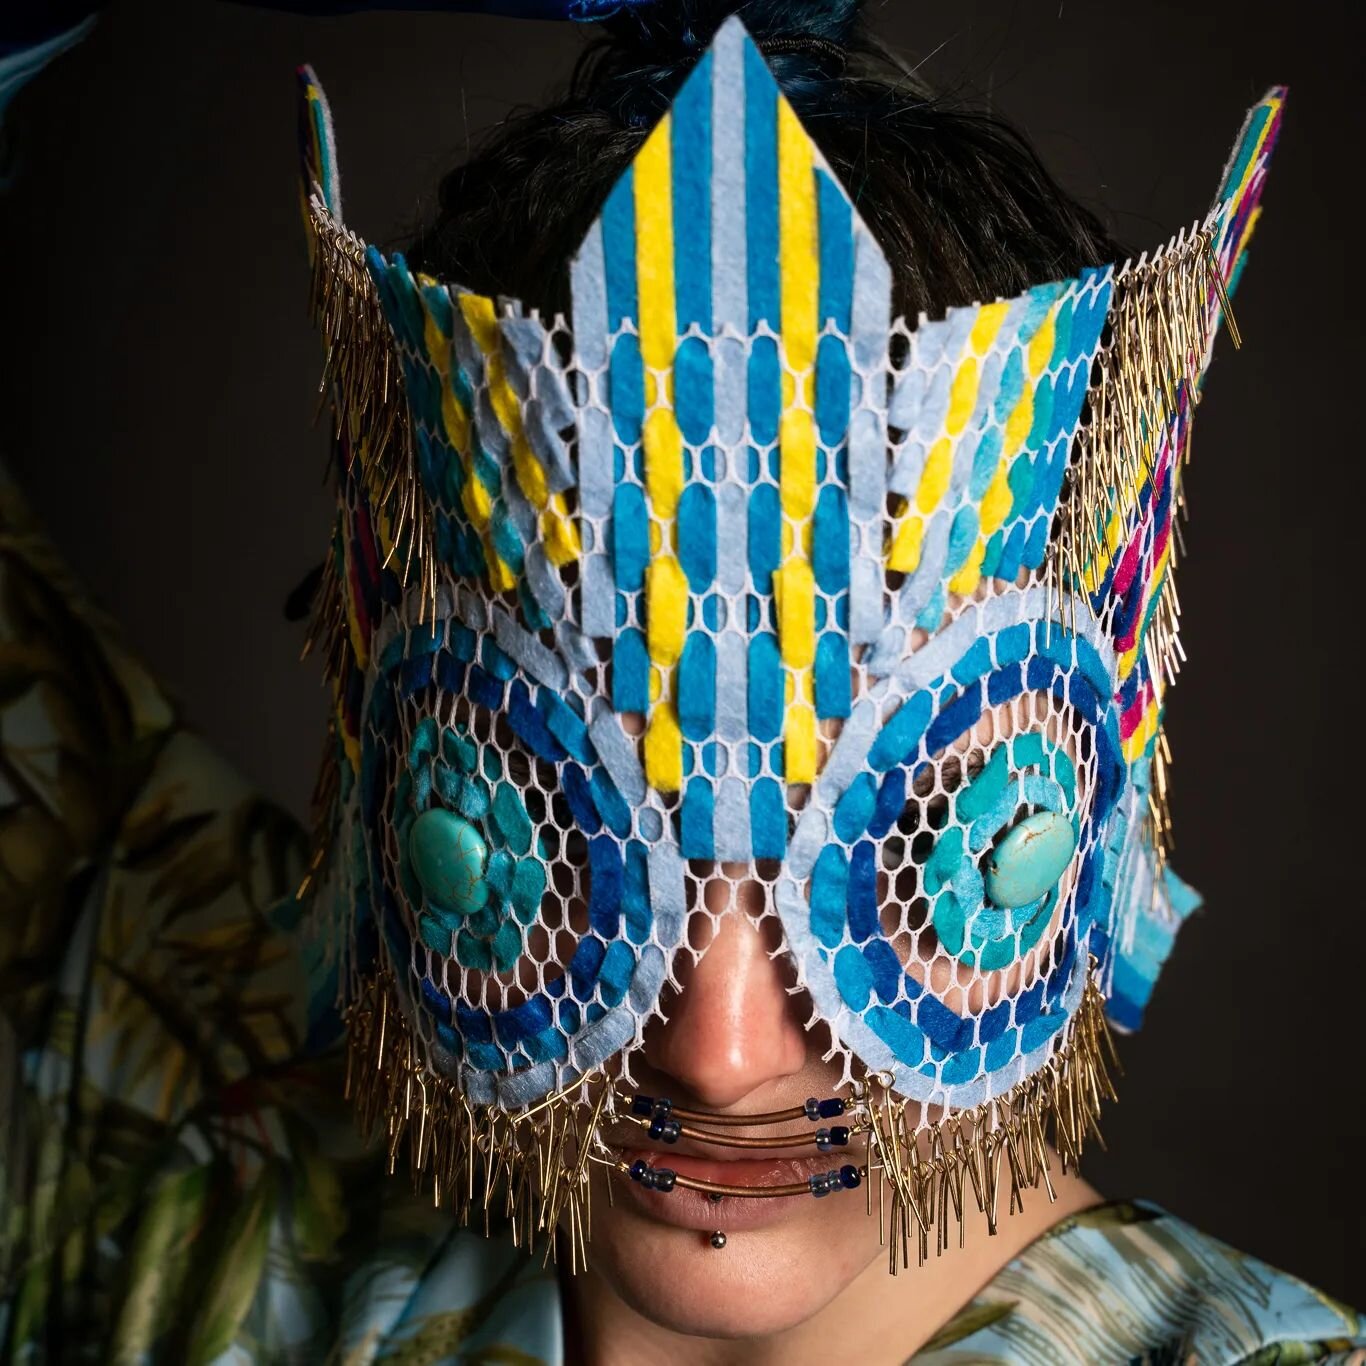 Owl-
Felt, jewelry wire, beads, mesh
--------------

📸 @jakewiththeshot
Model: @tumthecreator 

#maskemaiden #artistsofinstagram #maskmakers #arttowear #headdress #dreamy #fashionforbankrobbers #costume #mask #beautifulbizarre #beautifulart #owl #ow